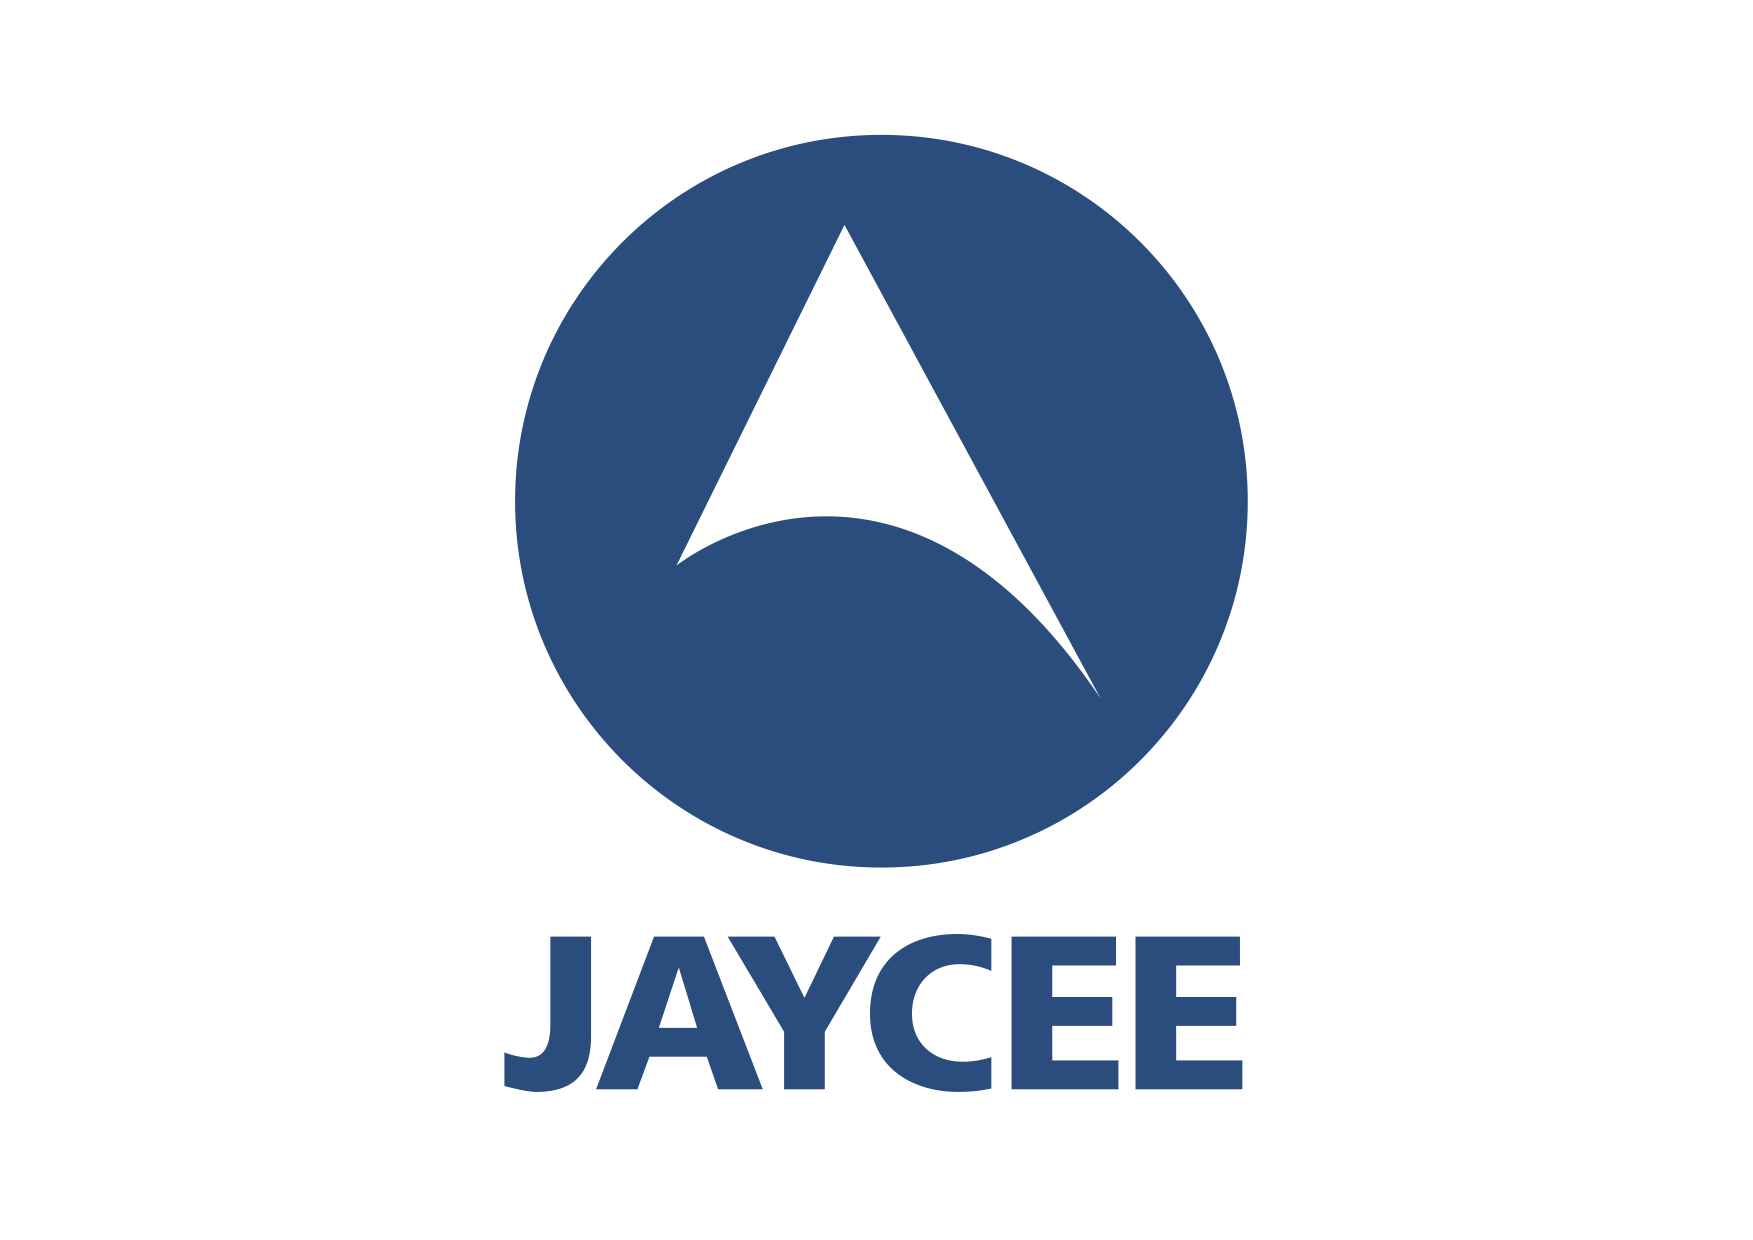 Jaycee_logo.jpg